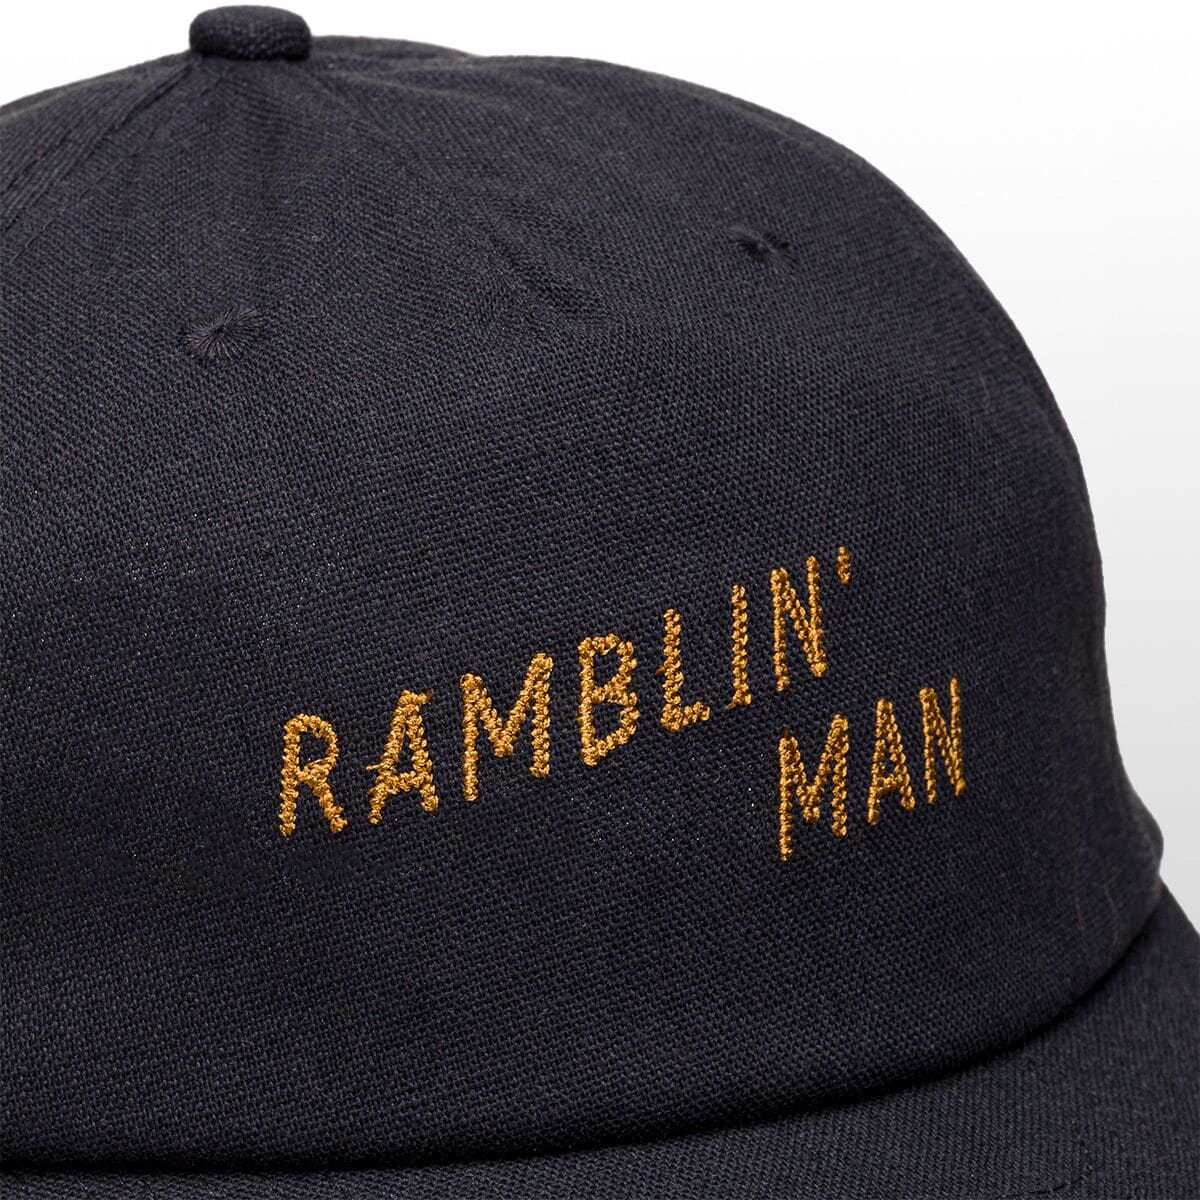 Seager Co. Ramblin Man Snapback Hat - Accessories